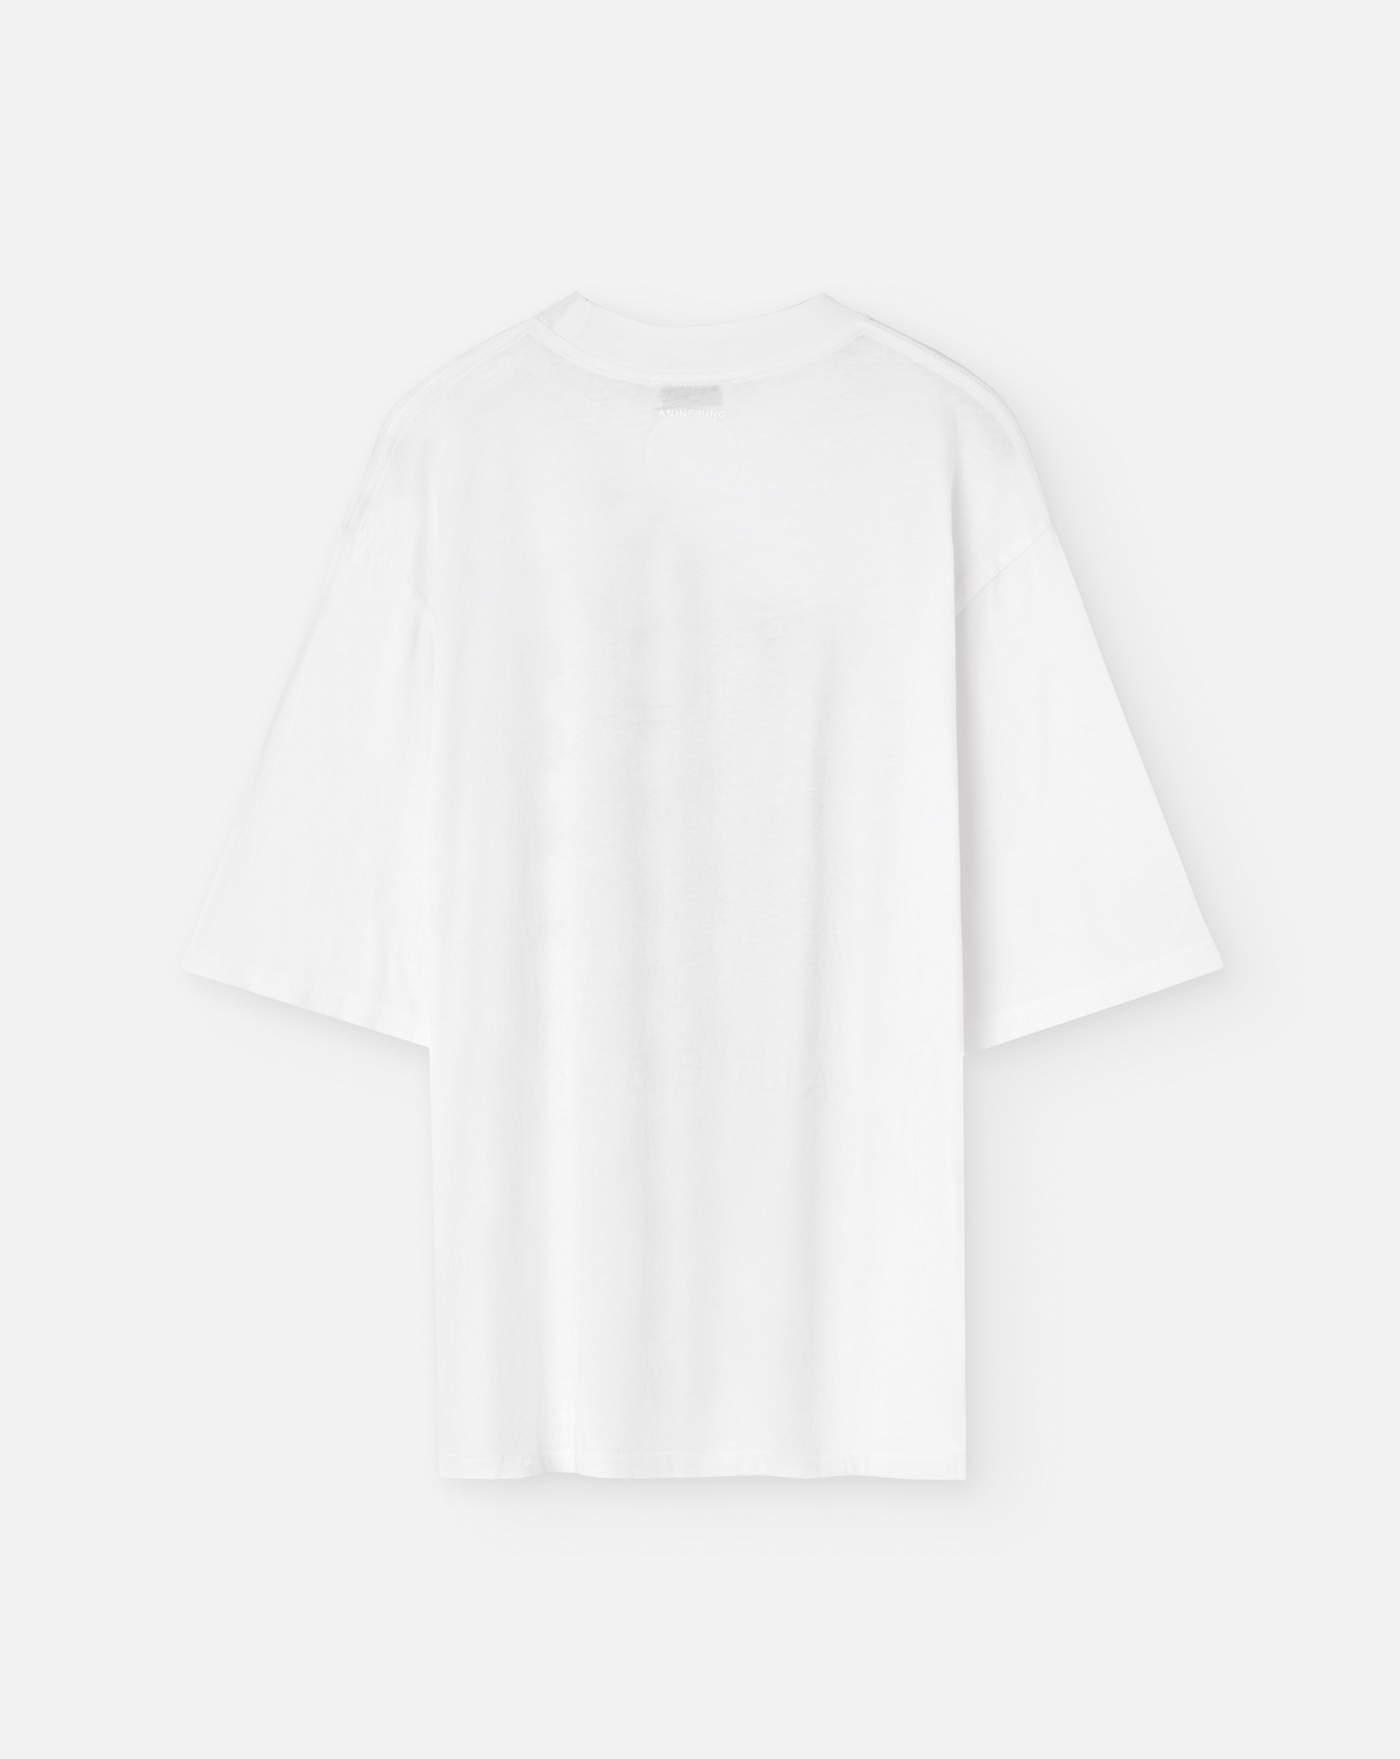 Camiseta Anine Bing Kate Moss 1